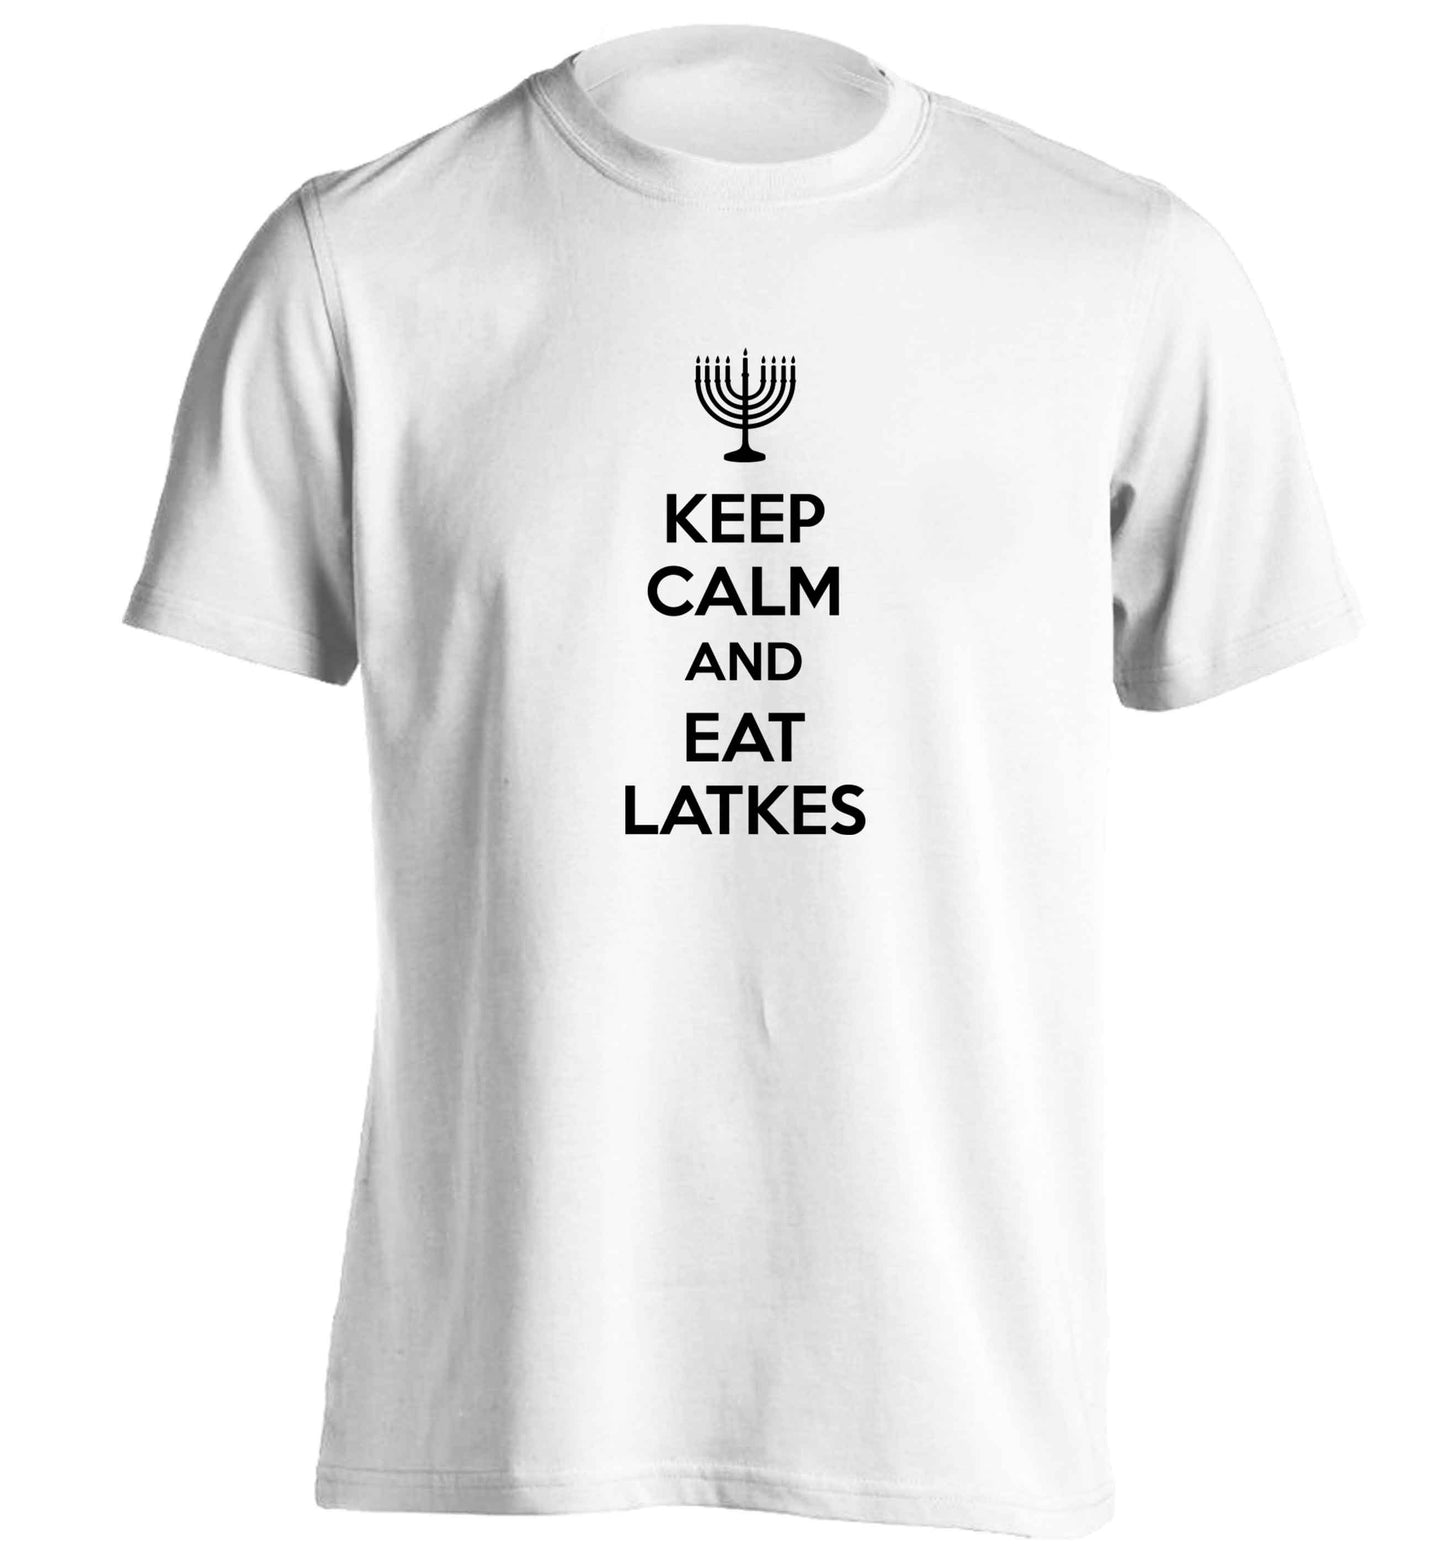 Keep calm and eat latkes adults unisex white Tshirt 2XL